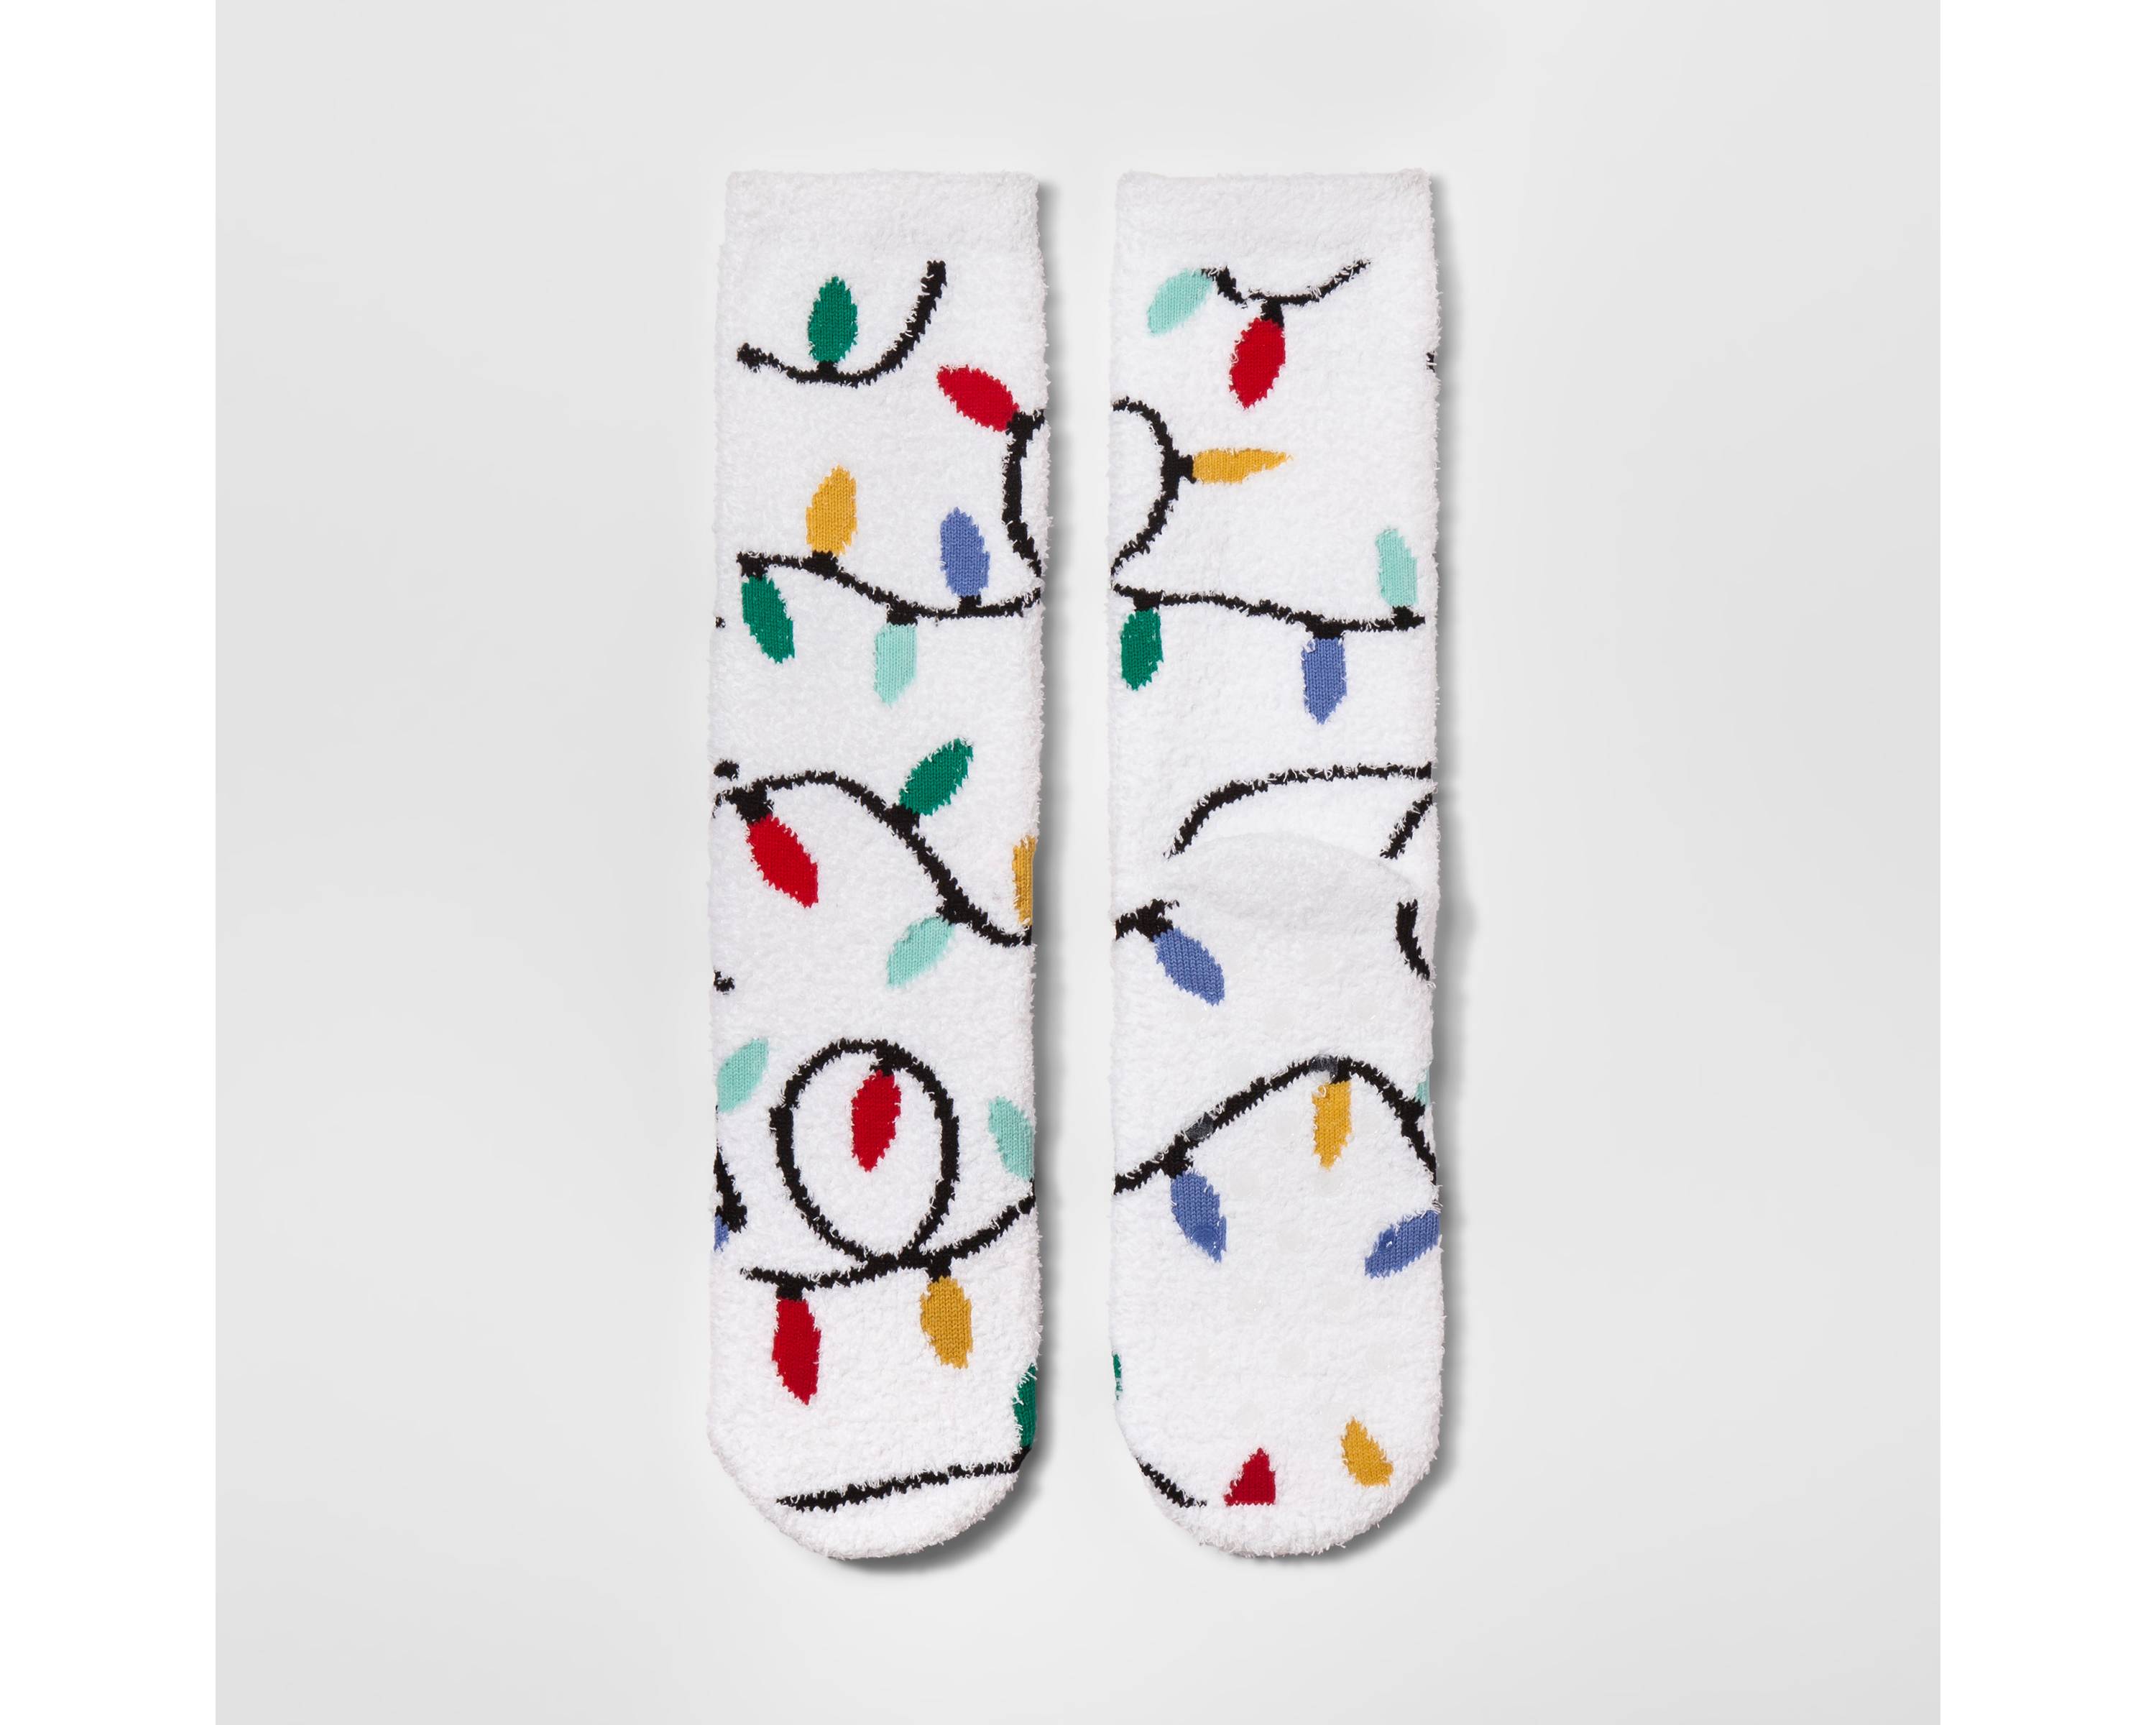 Stocking stuffer ideas for kids under $5: Cozy socks